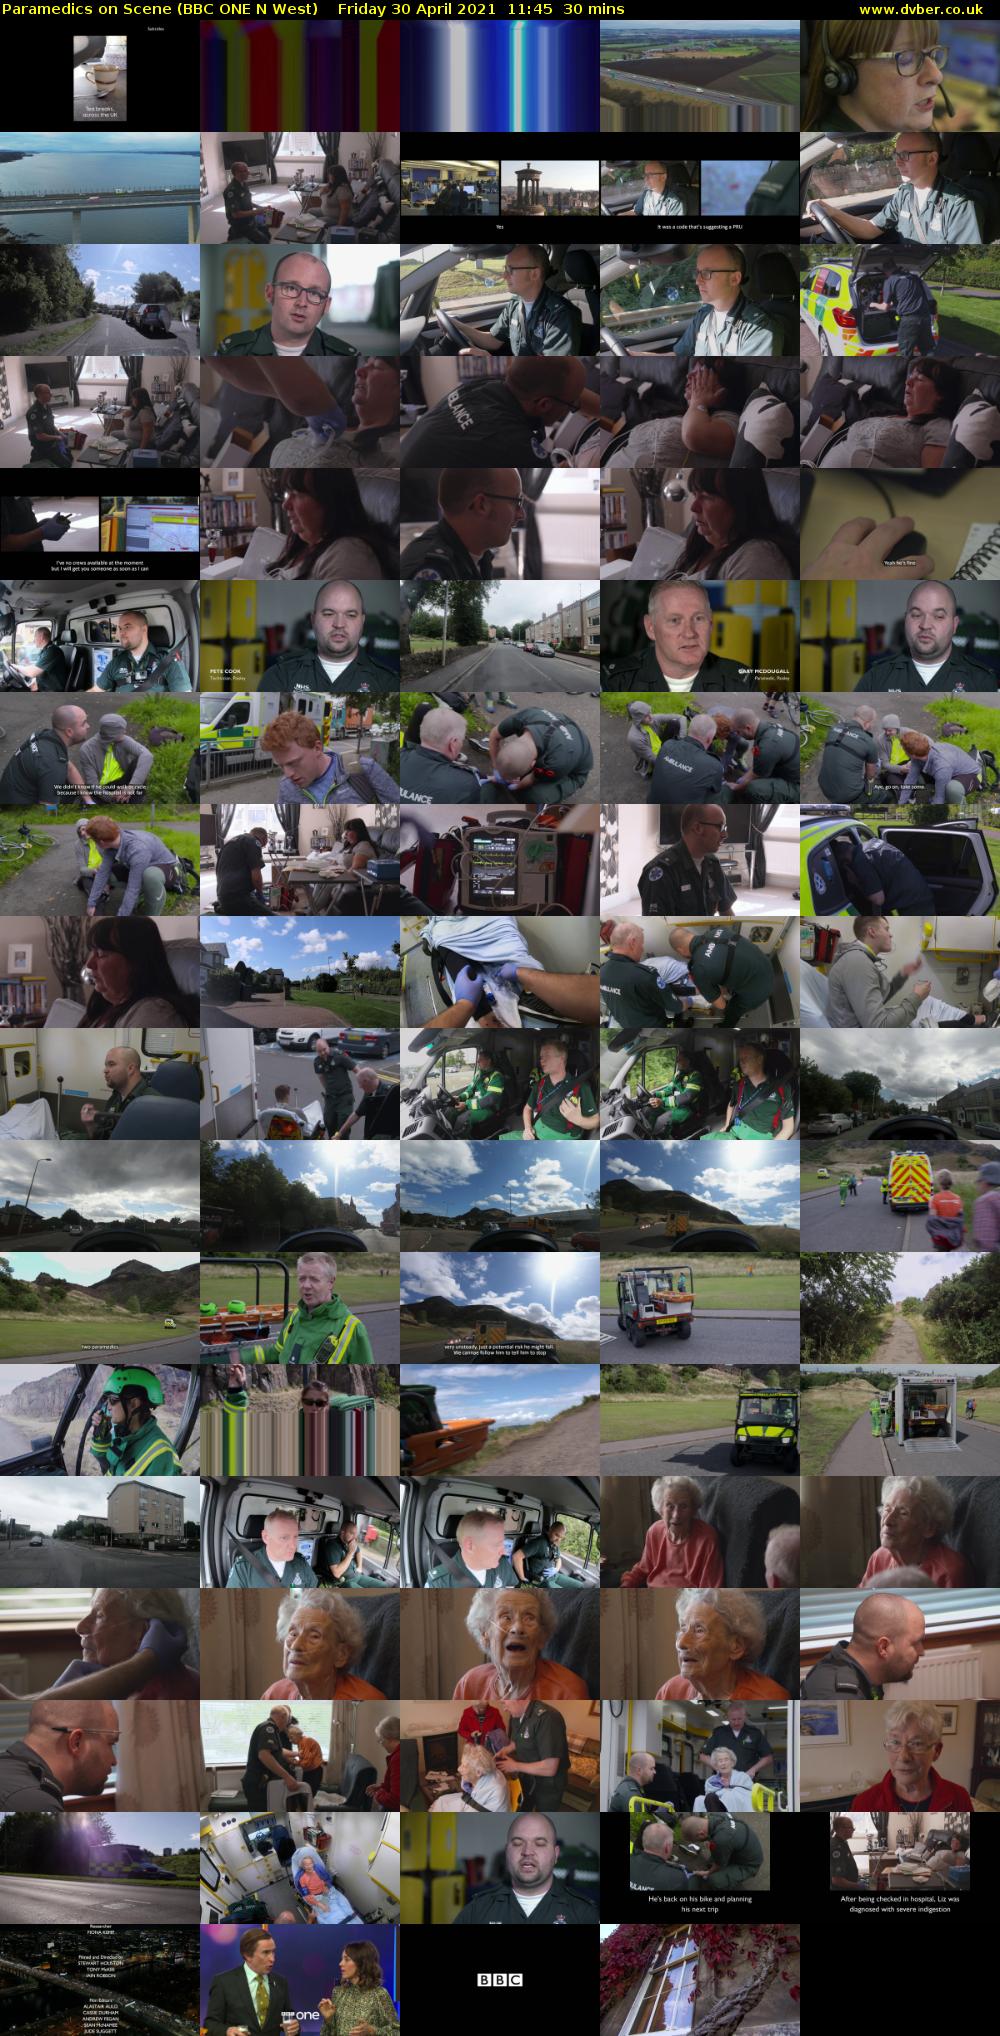 Paramedics on Scene (BBC ONE N West) Friday 30 April 2021 11:45 - 12:15